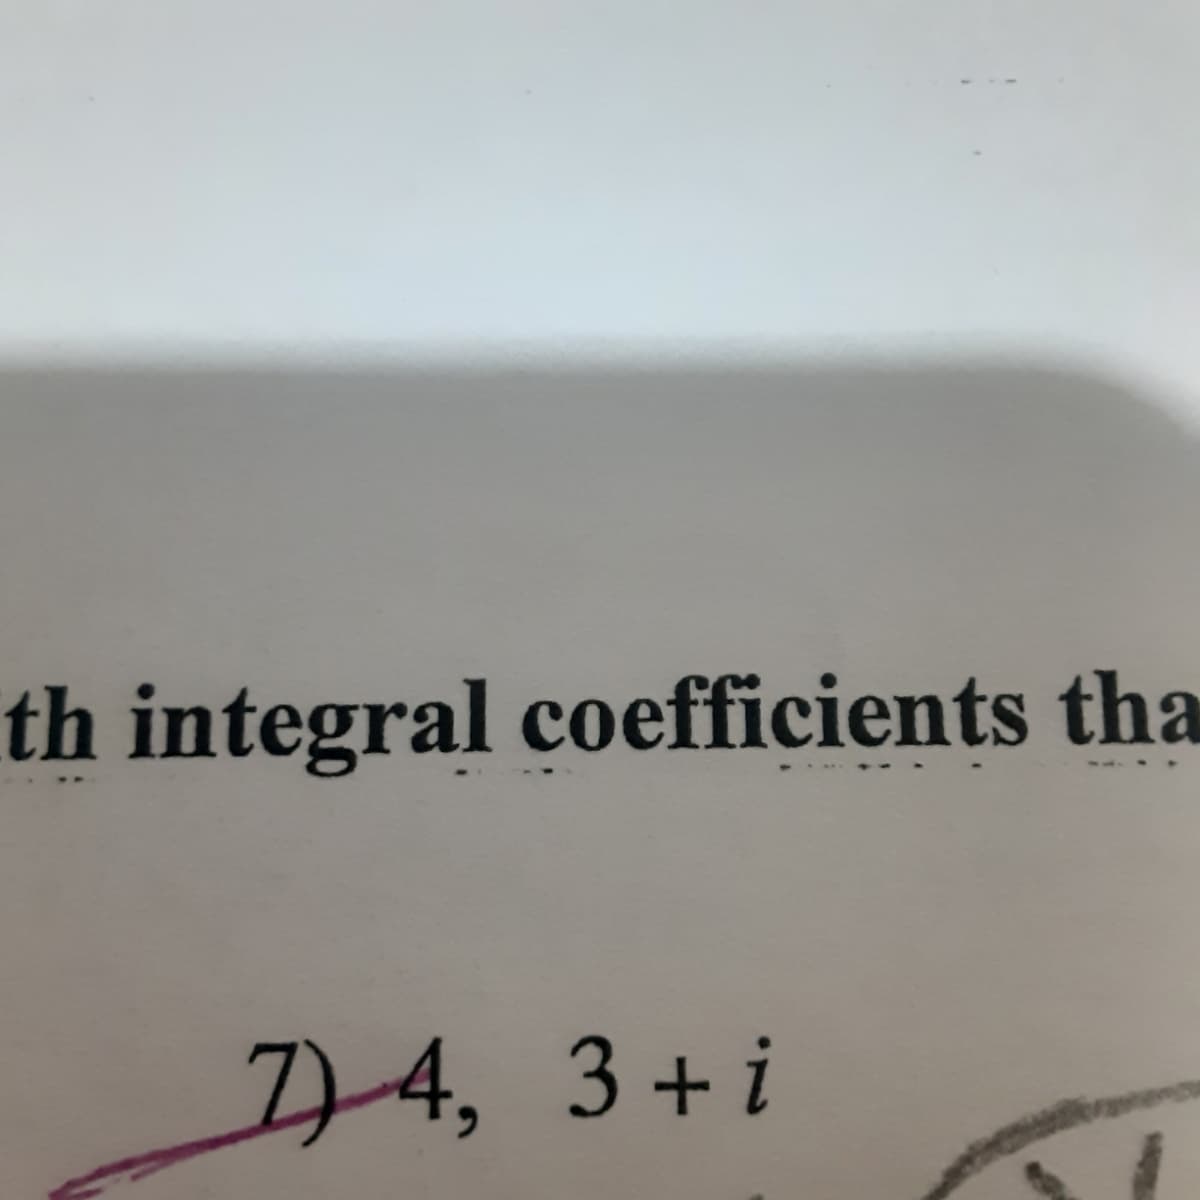 th integral coefficients tha
D4, 3+i
